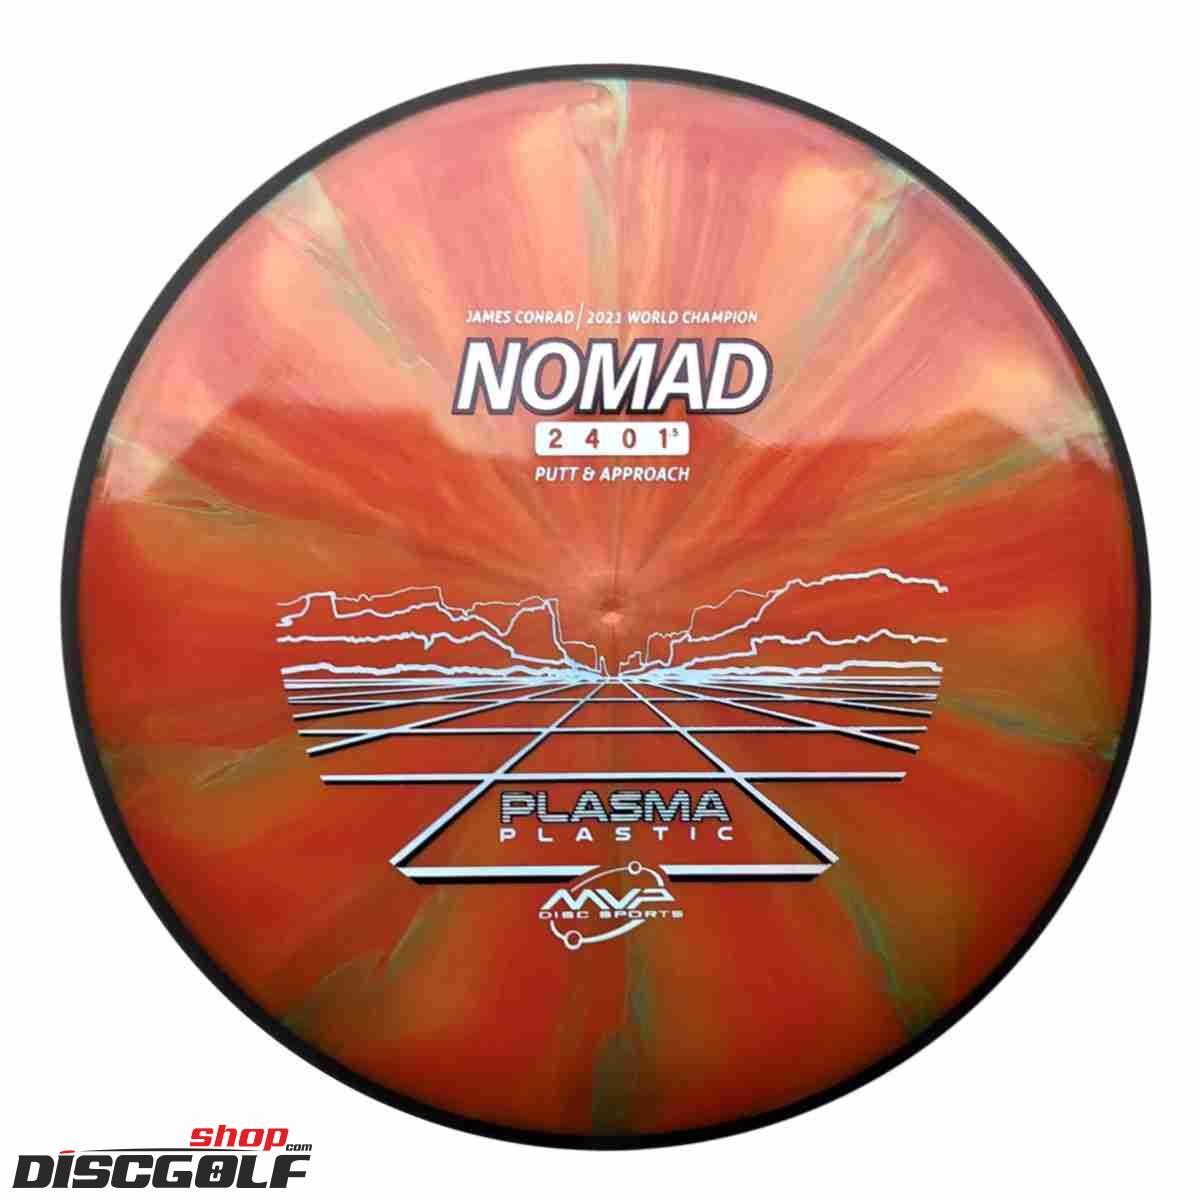 MVP Nomad Plasma James Conrad 2021 World Champion (discgolf)